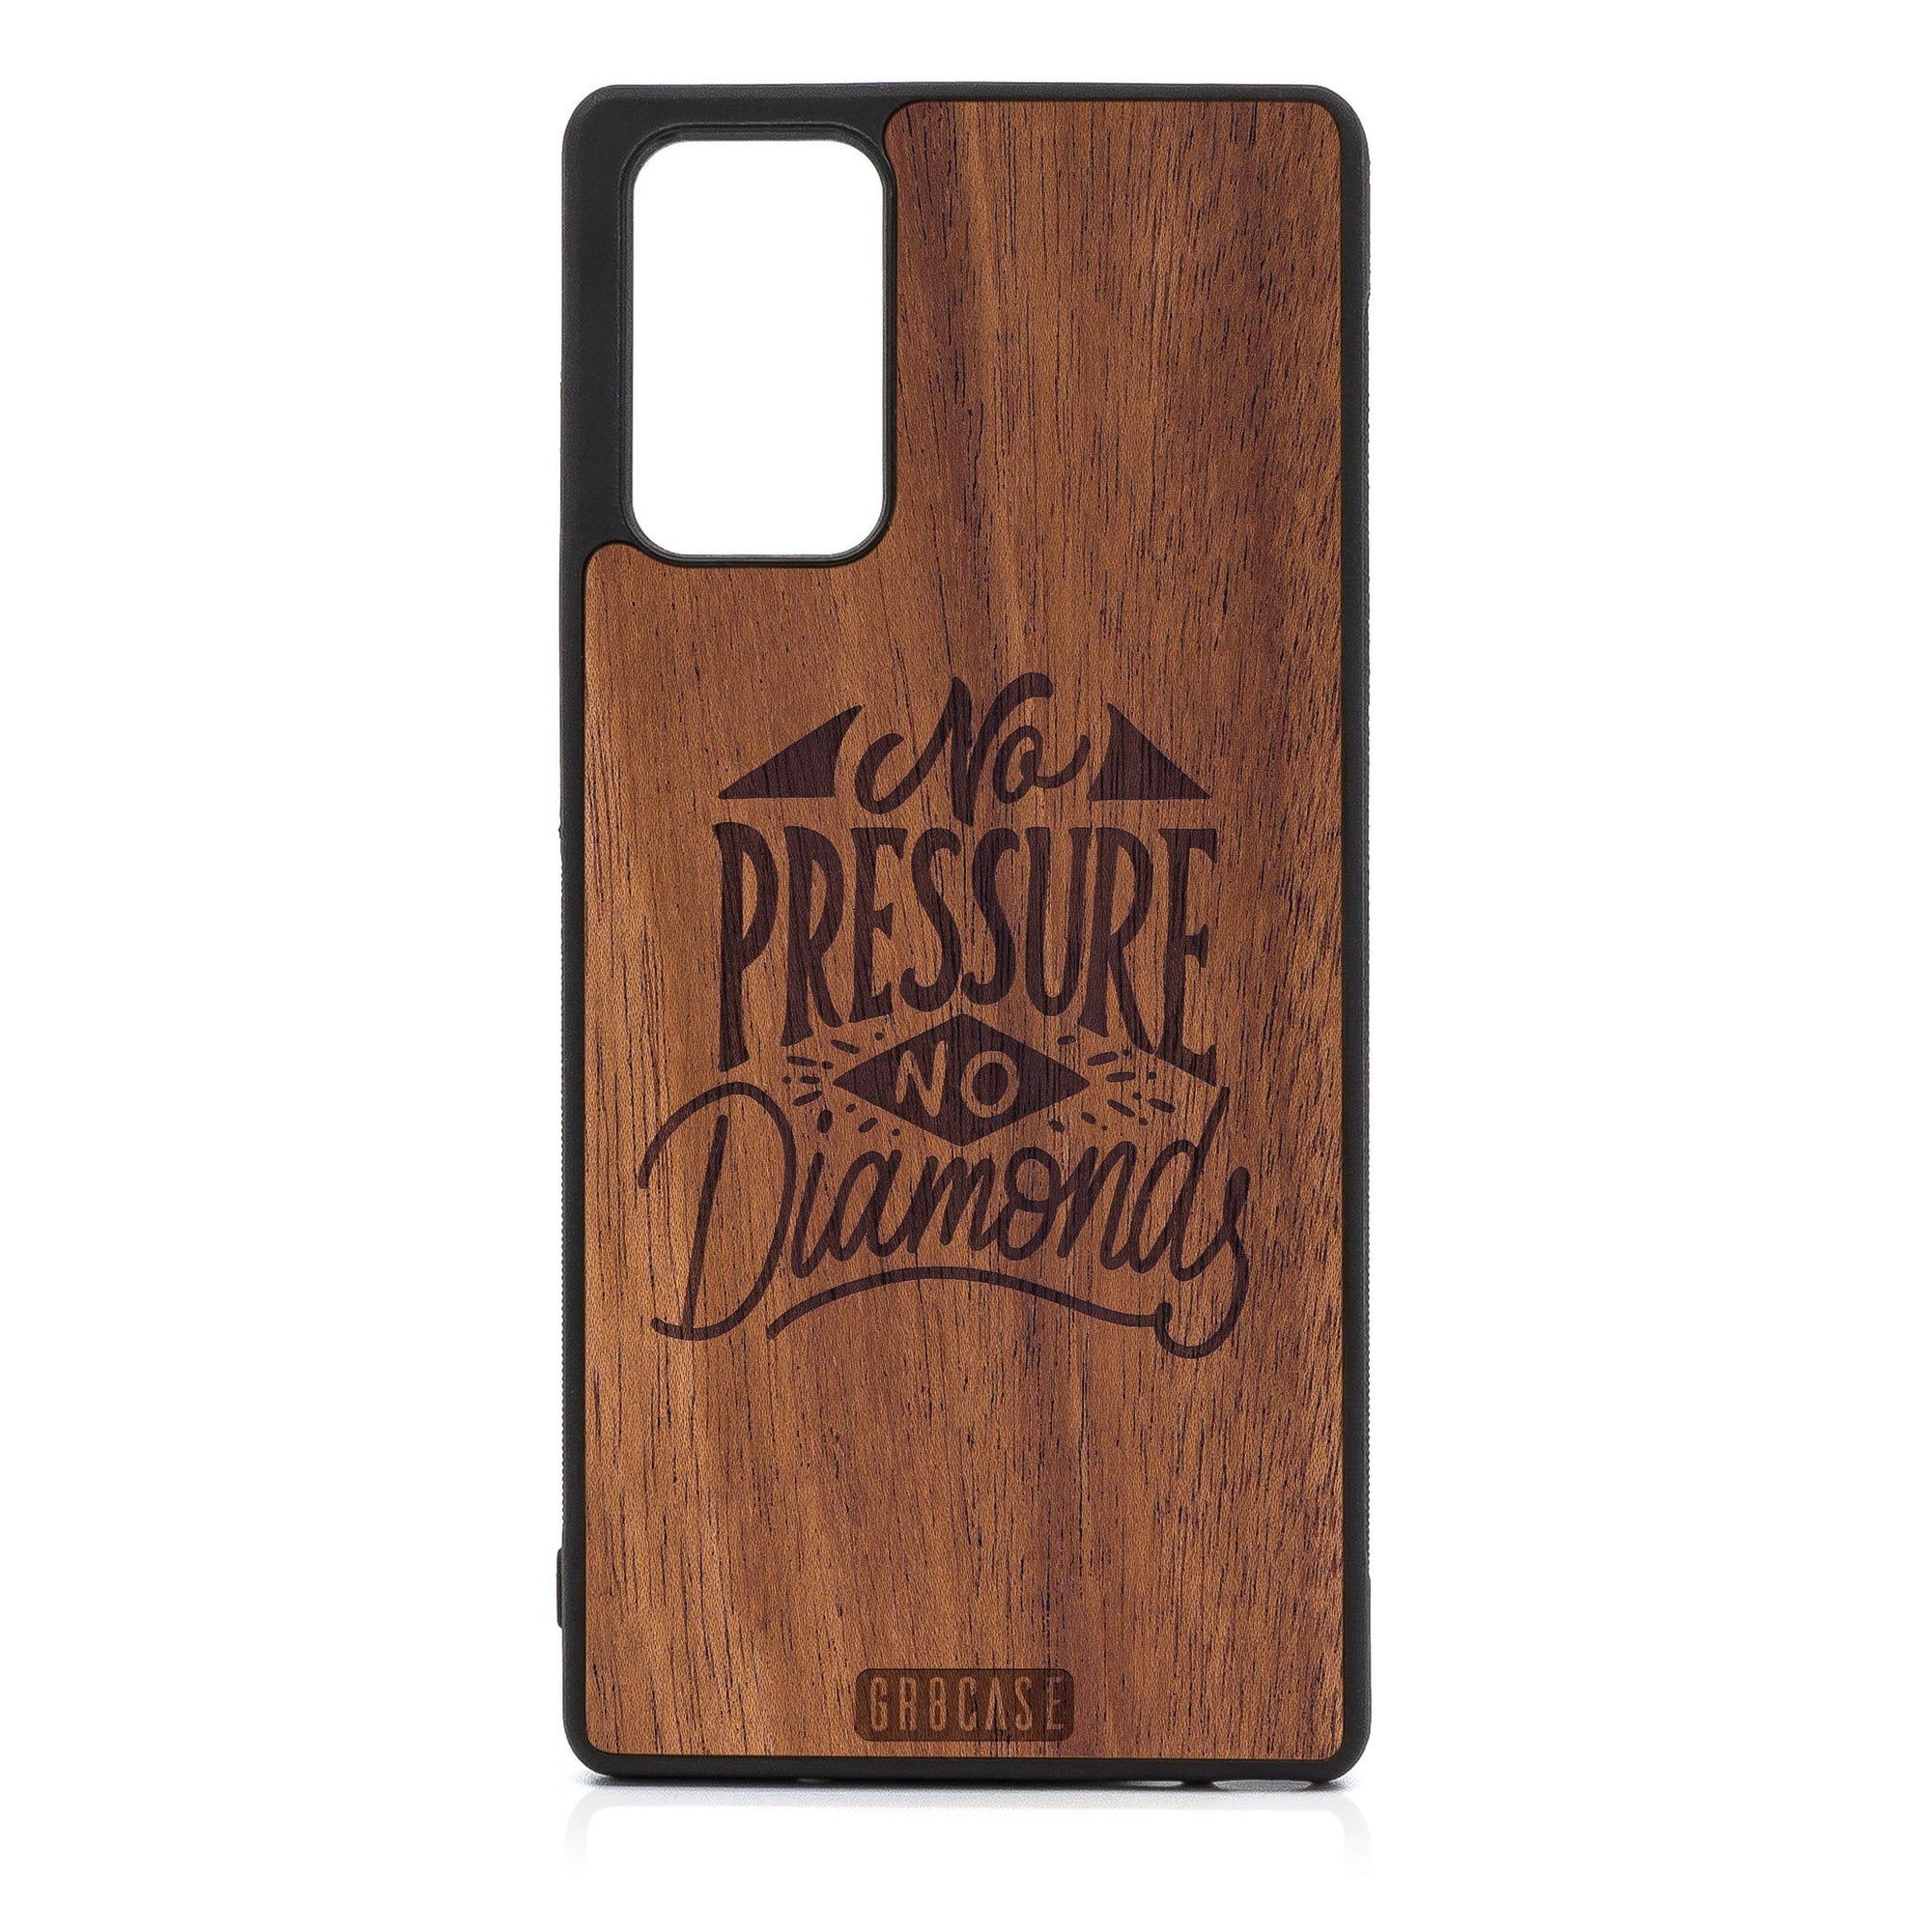 No Pressure No Diamonds Design Wood Case For Samsung Galaxy Note 20